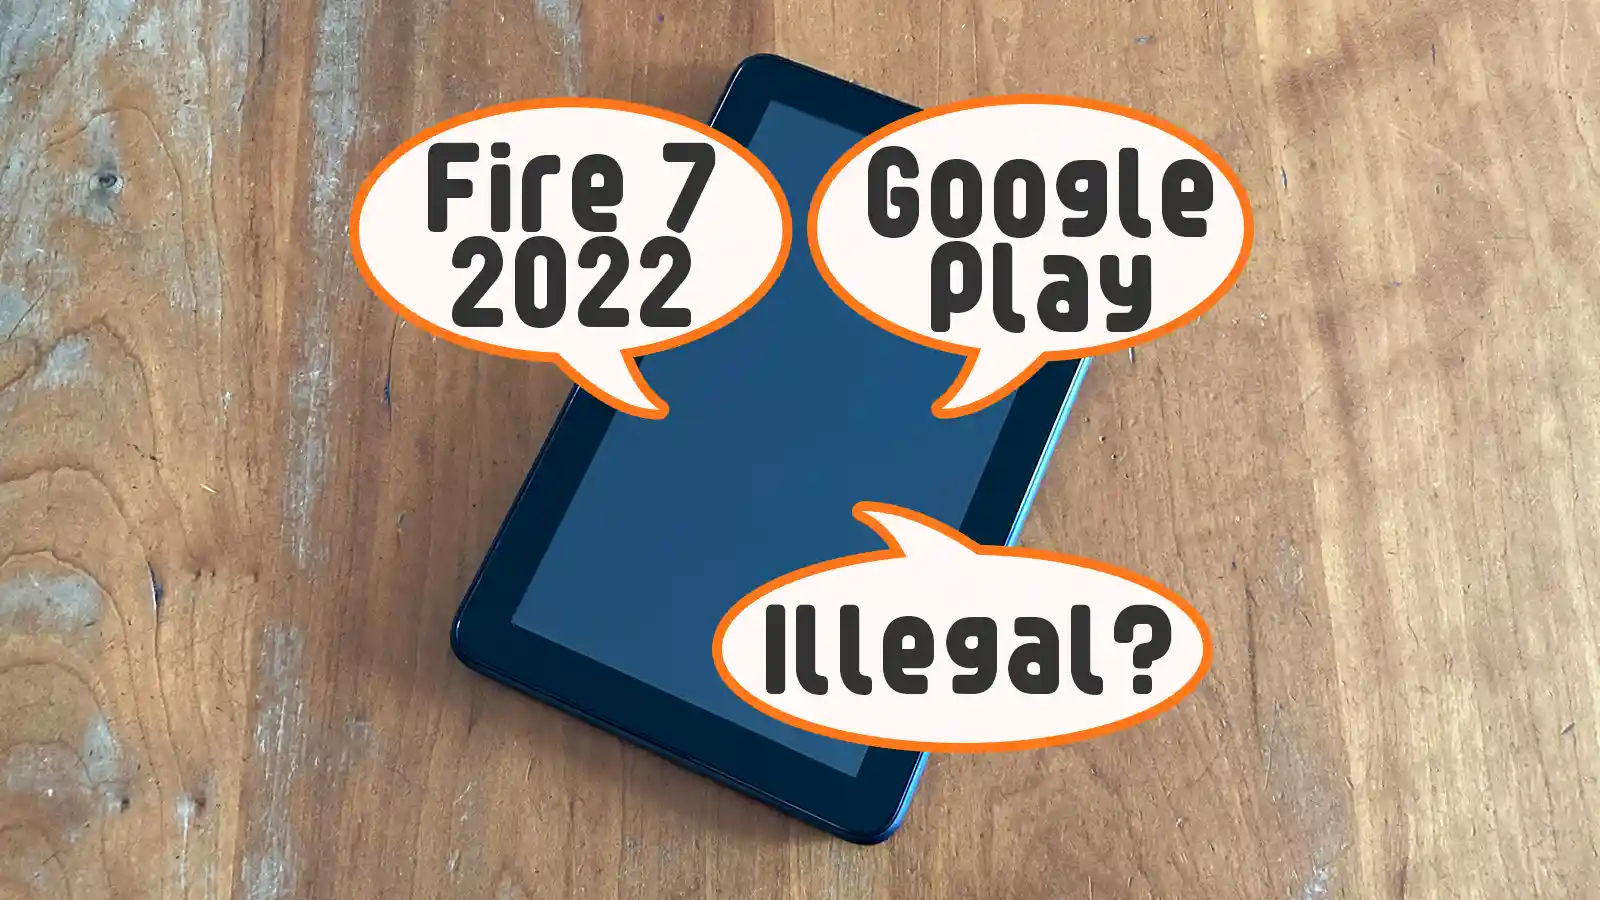 fire7_2022_google_play_illegal_fi_2207_w1600px